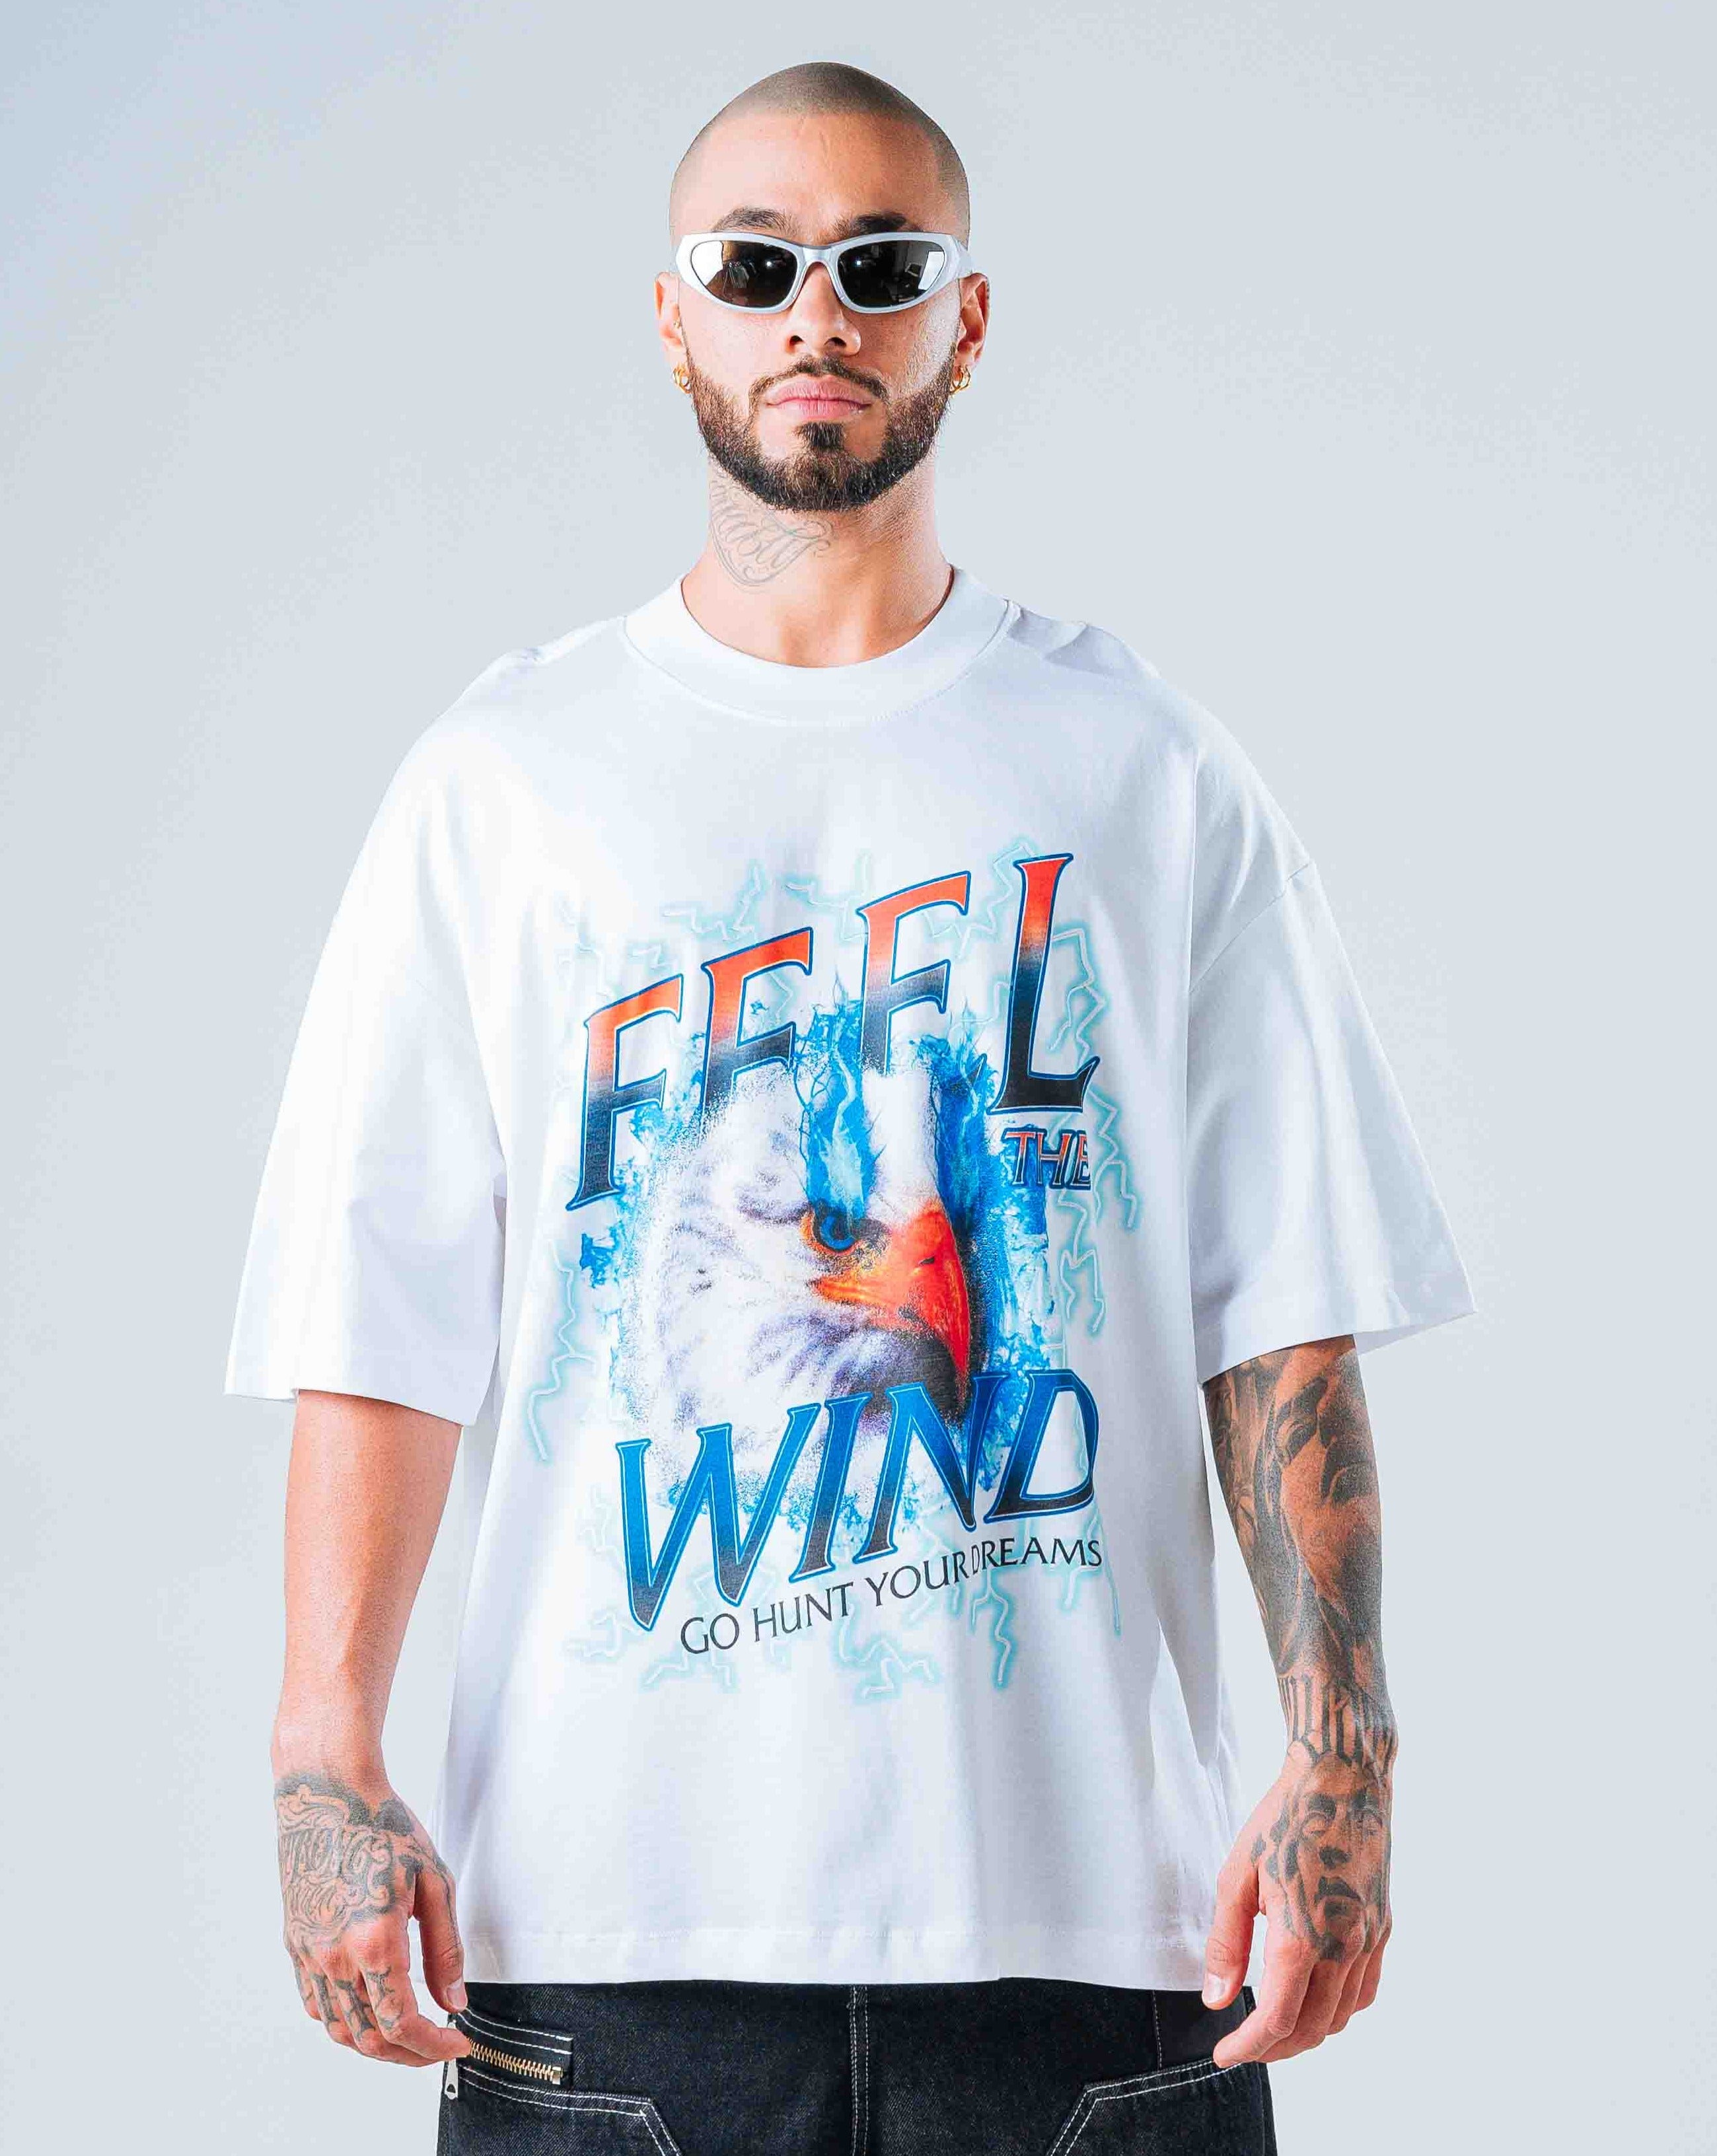 Camiseta Oversize Feel Wind